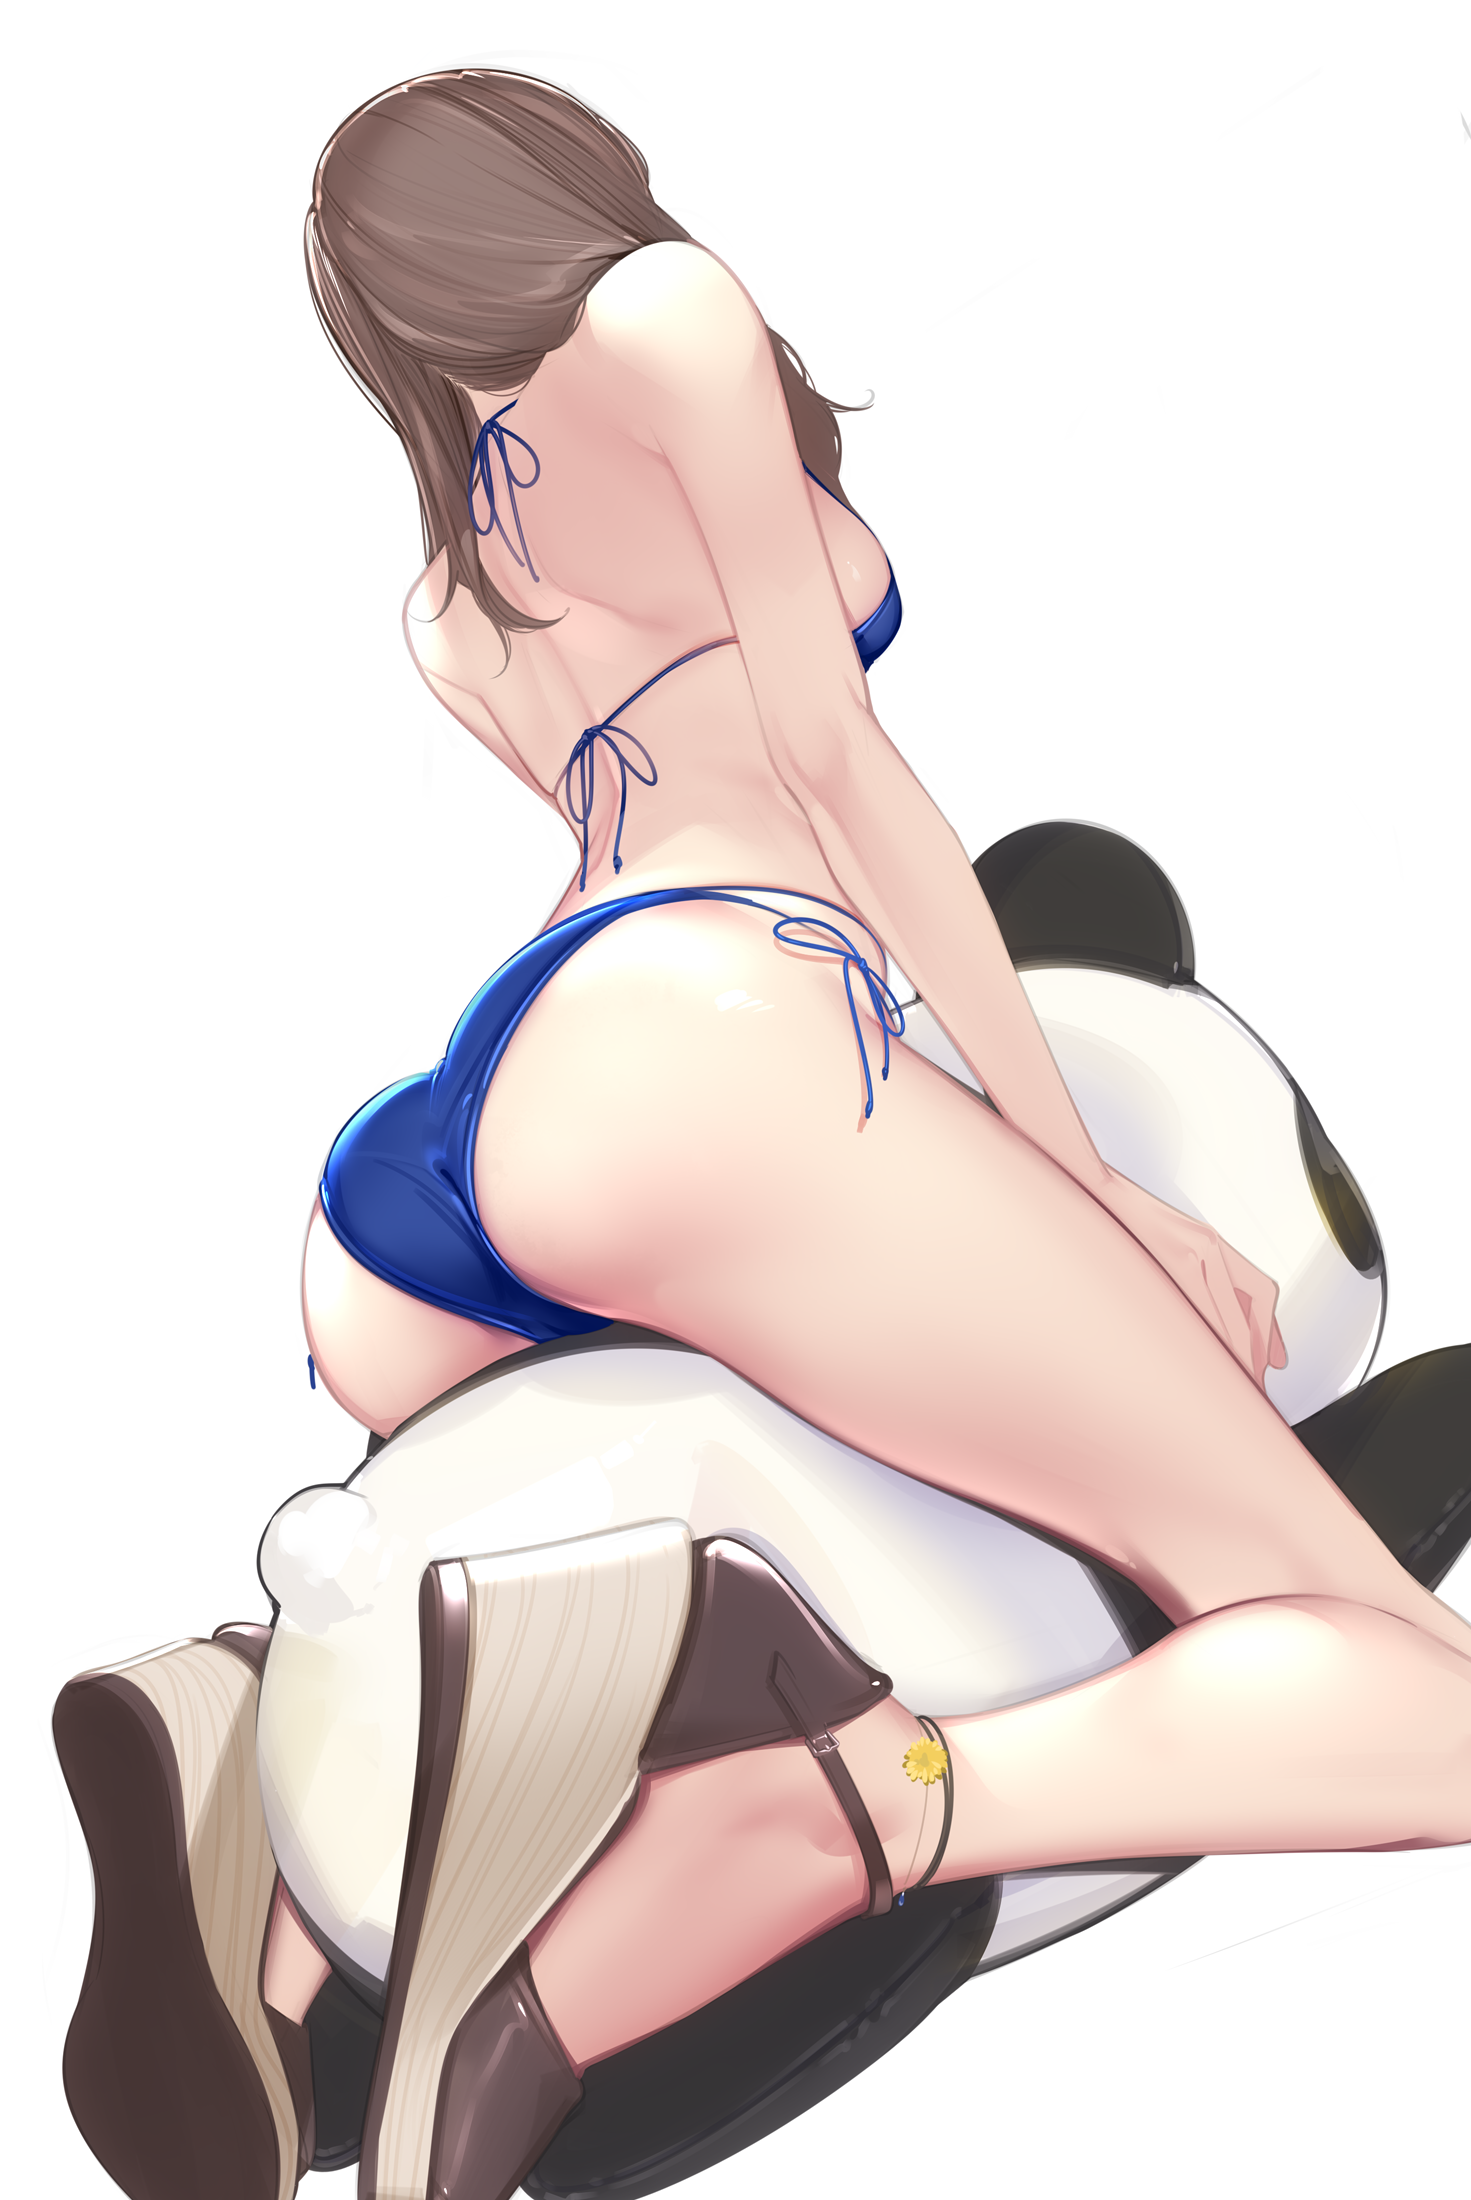 Anime 1471x2200 anime anime girls sideboob ass bikini cushion riding brunette artwork Ama Mitsuki